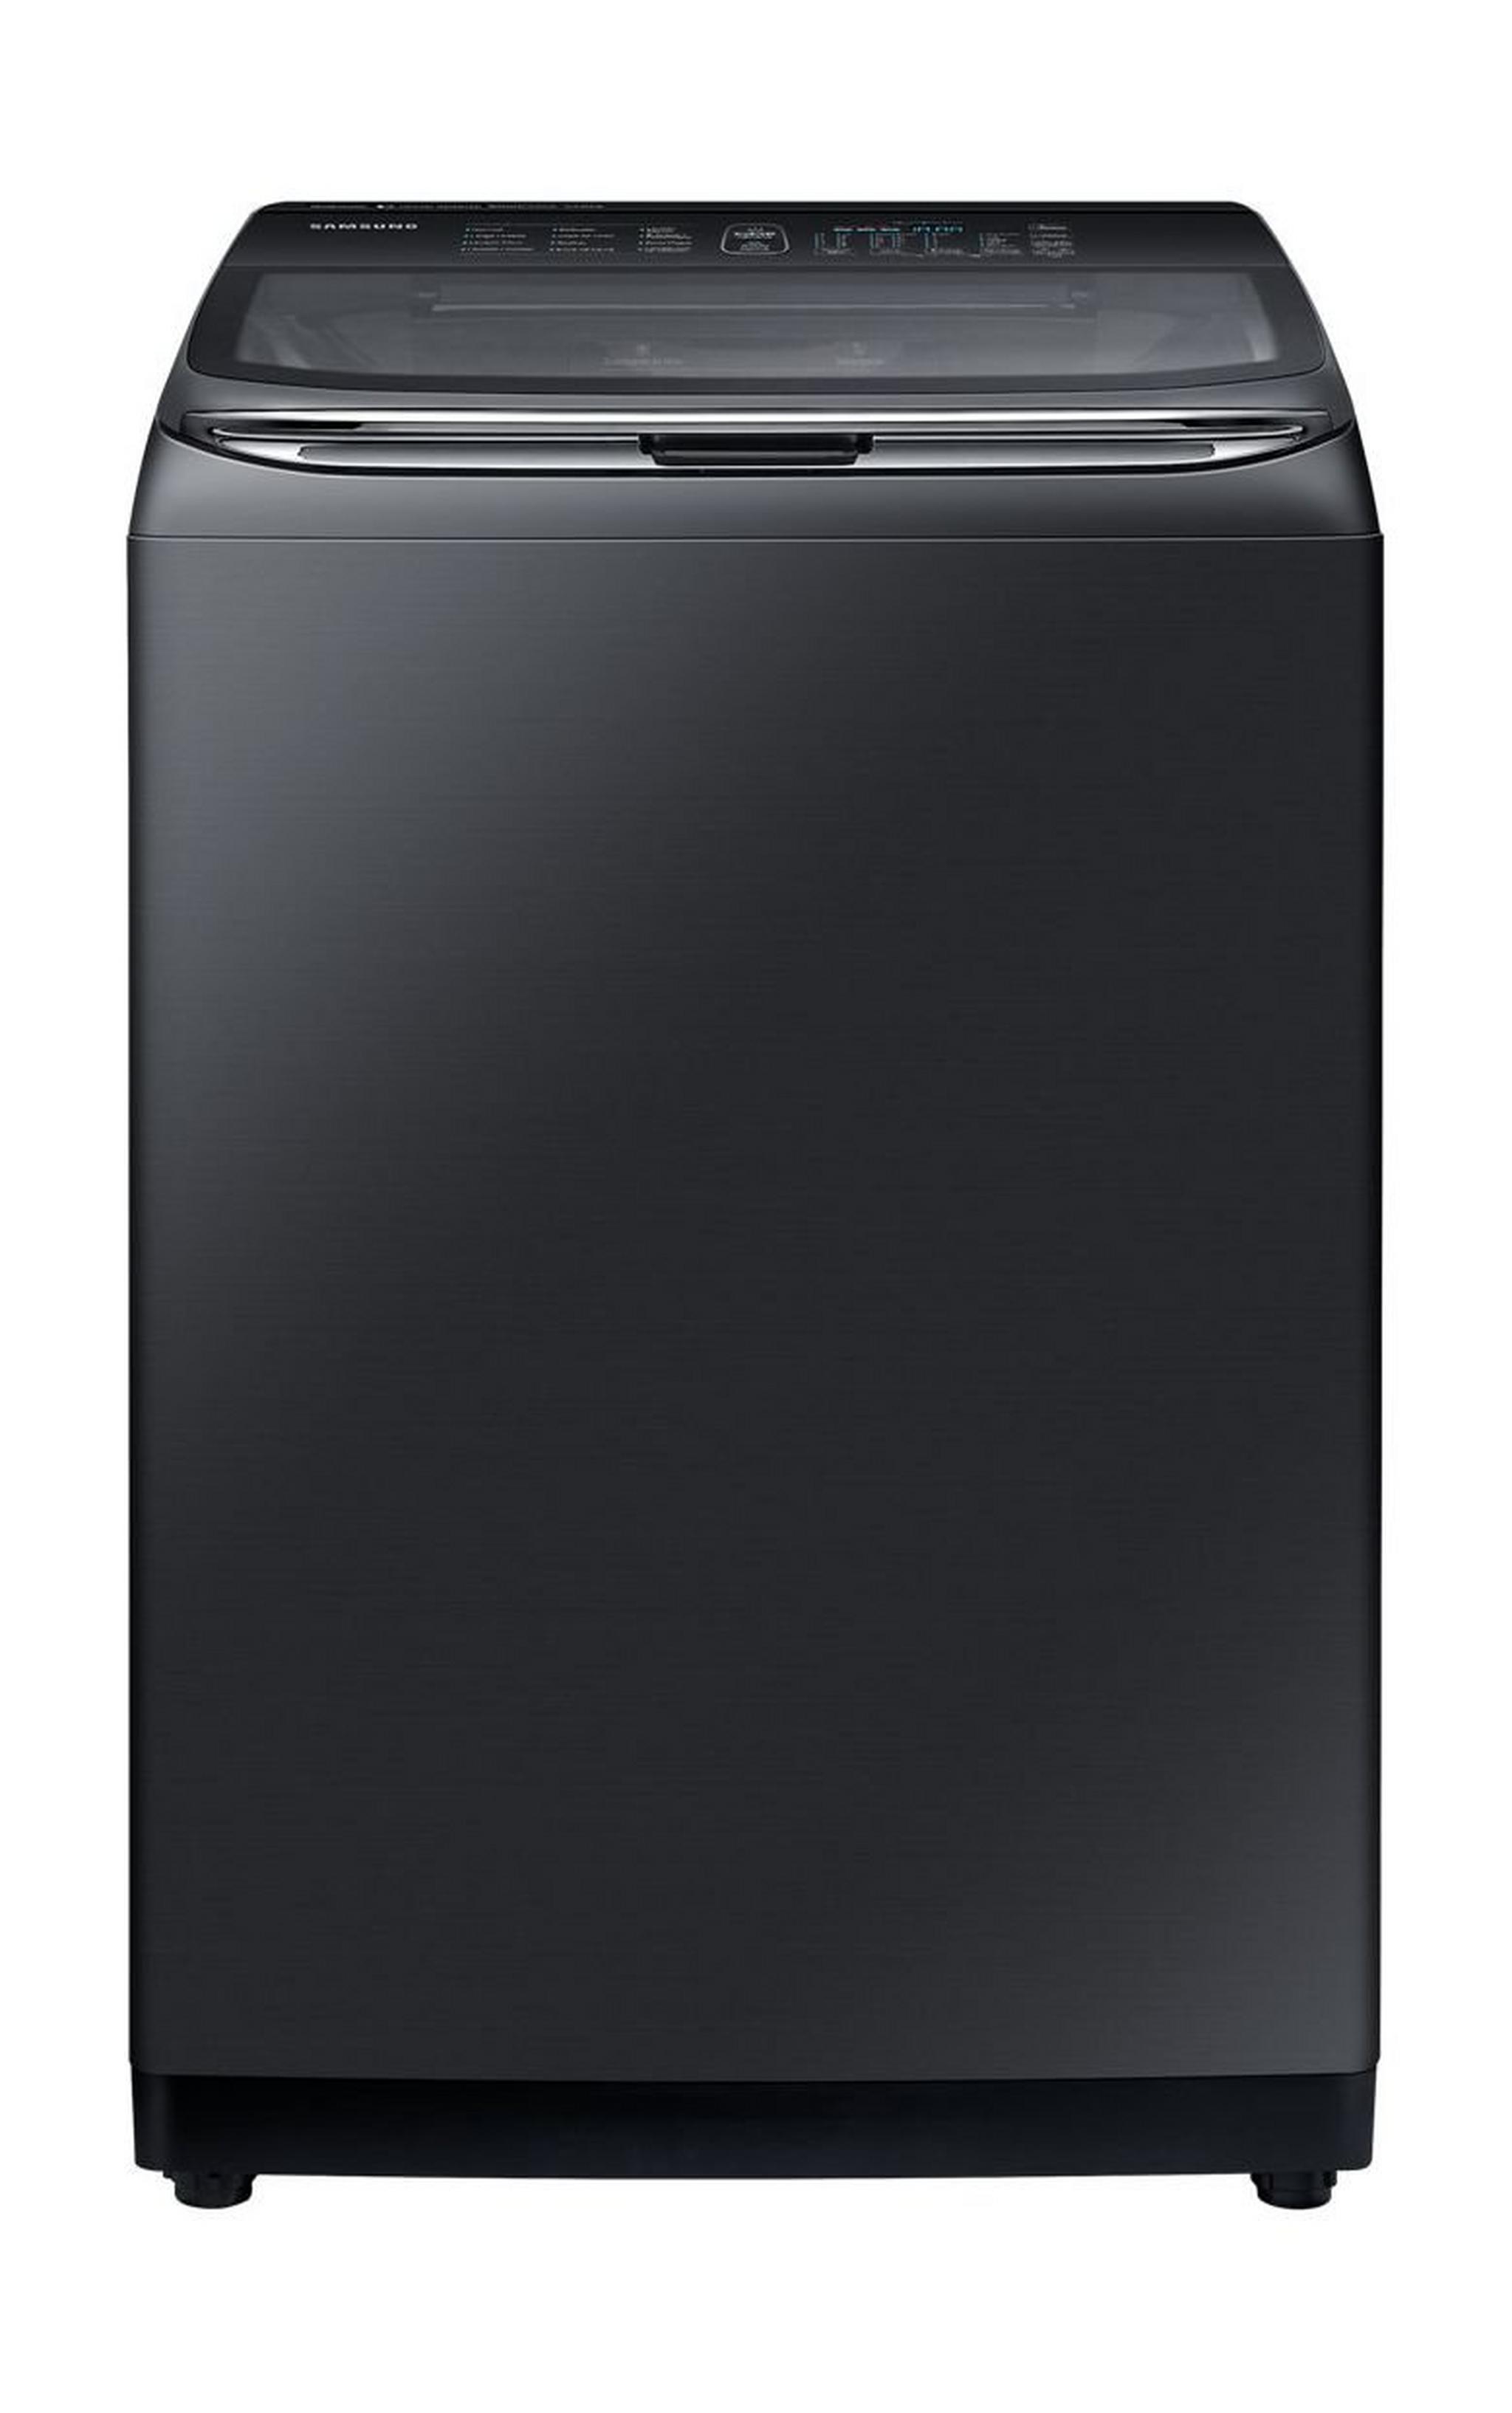 Samsung 22 kg Top Load Washing Machine (WA22M8700GV) - Silver